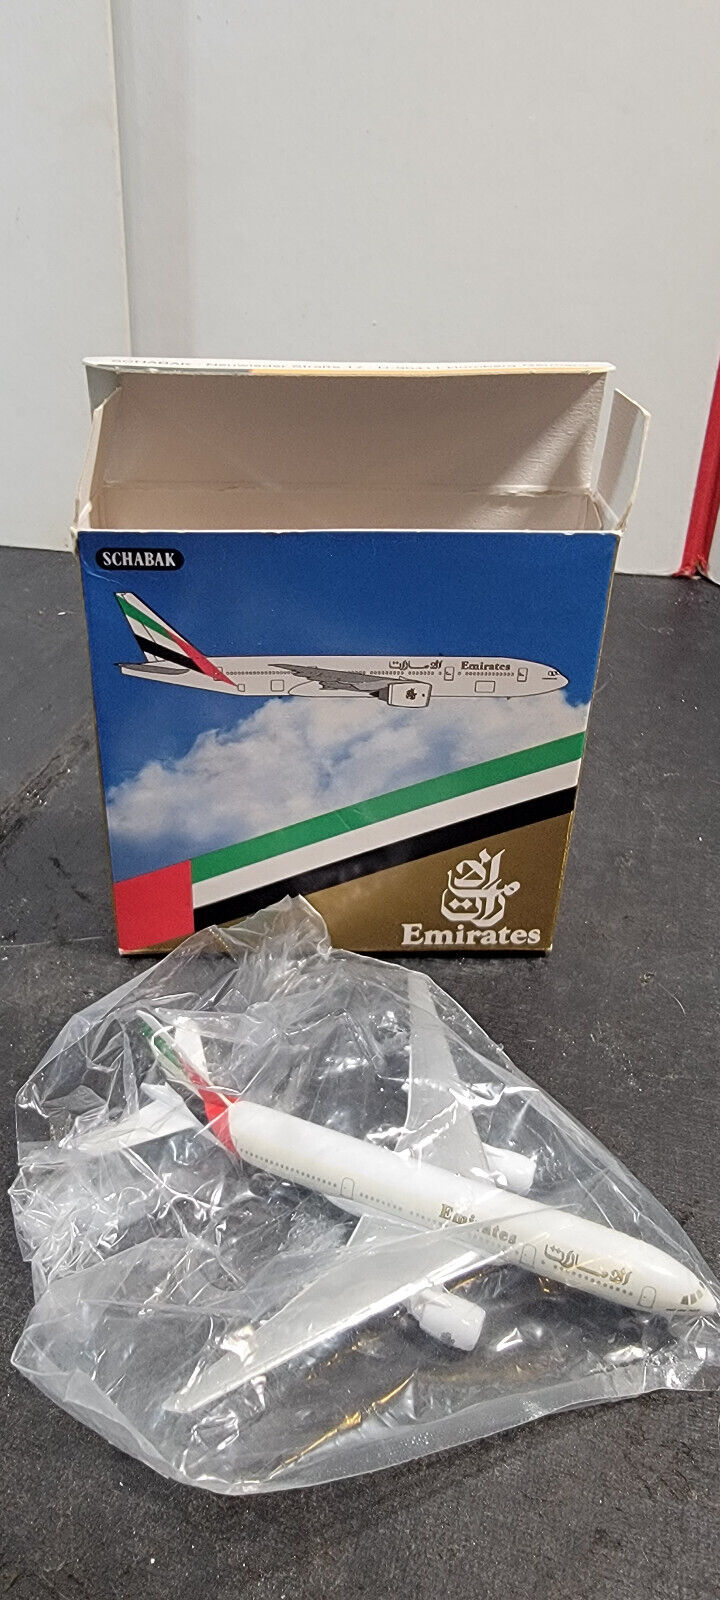 Schabak Aircraft Airlines 1/600 - Boeing 777 Emirates